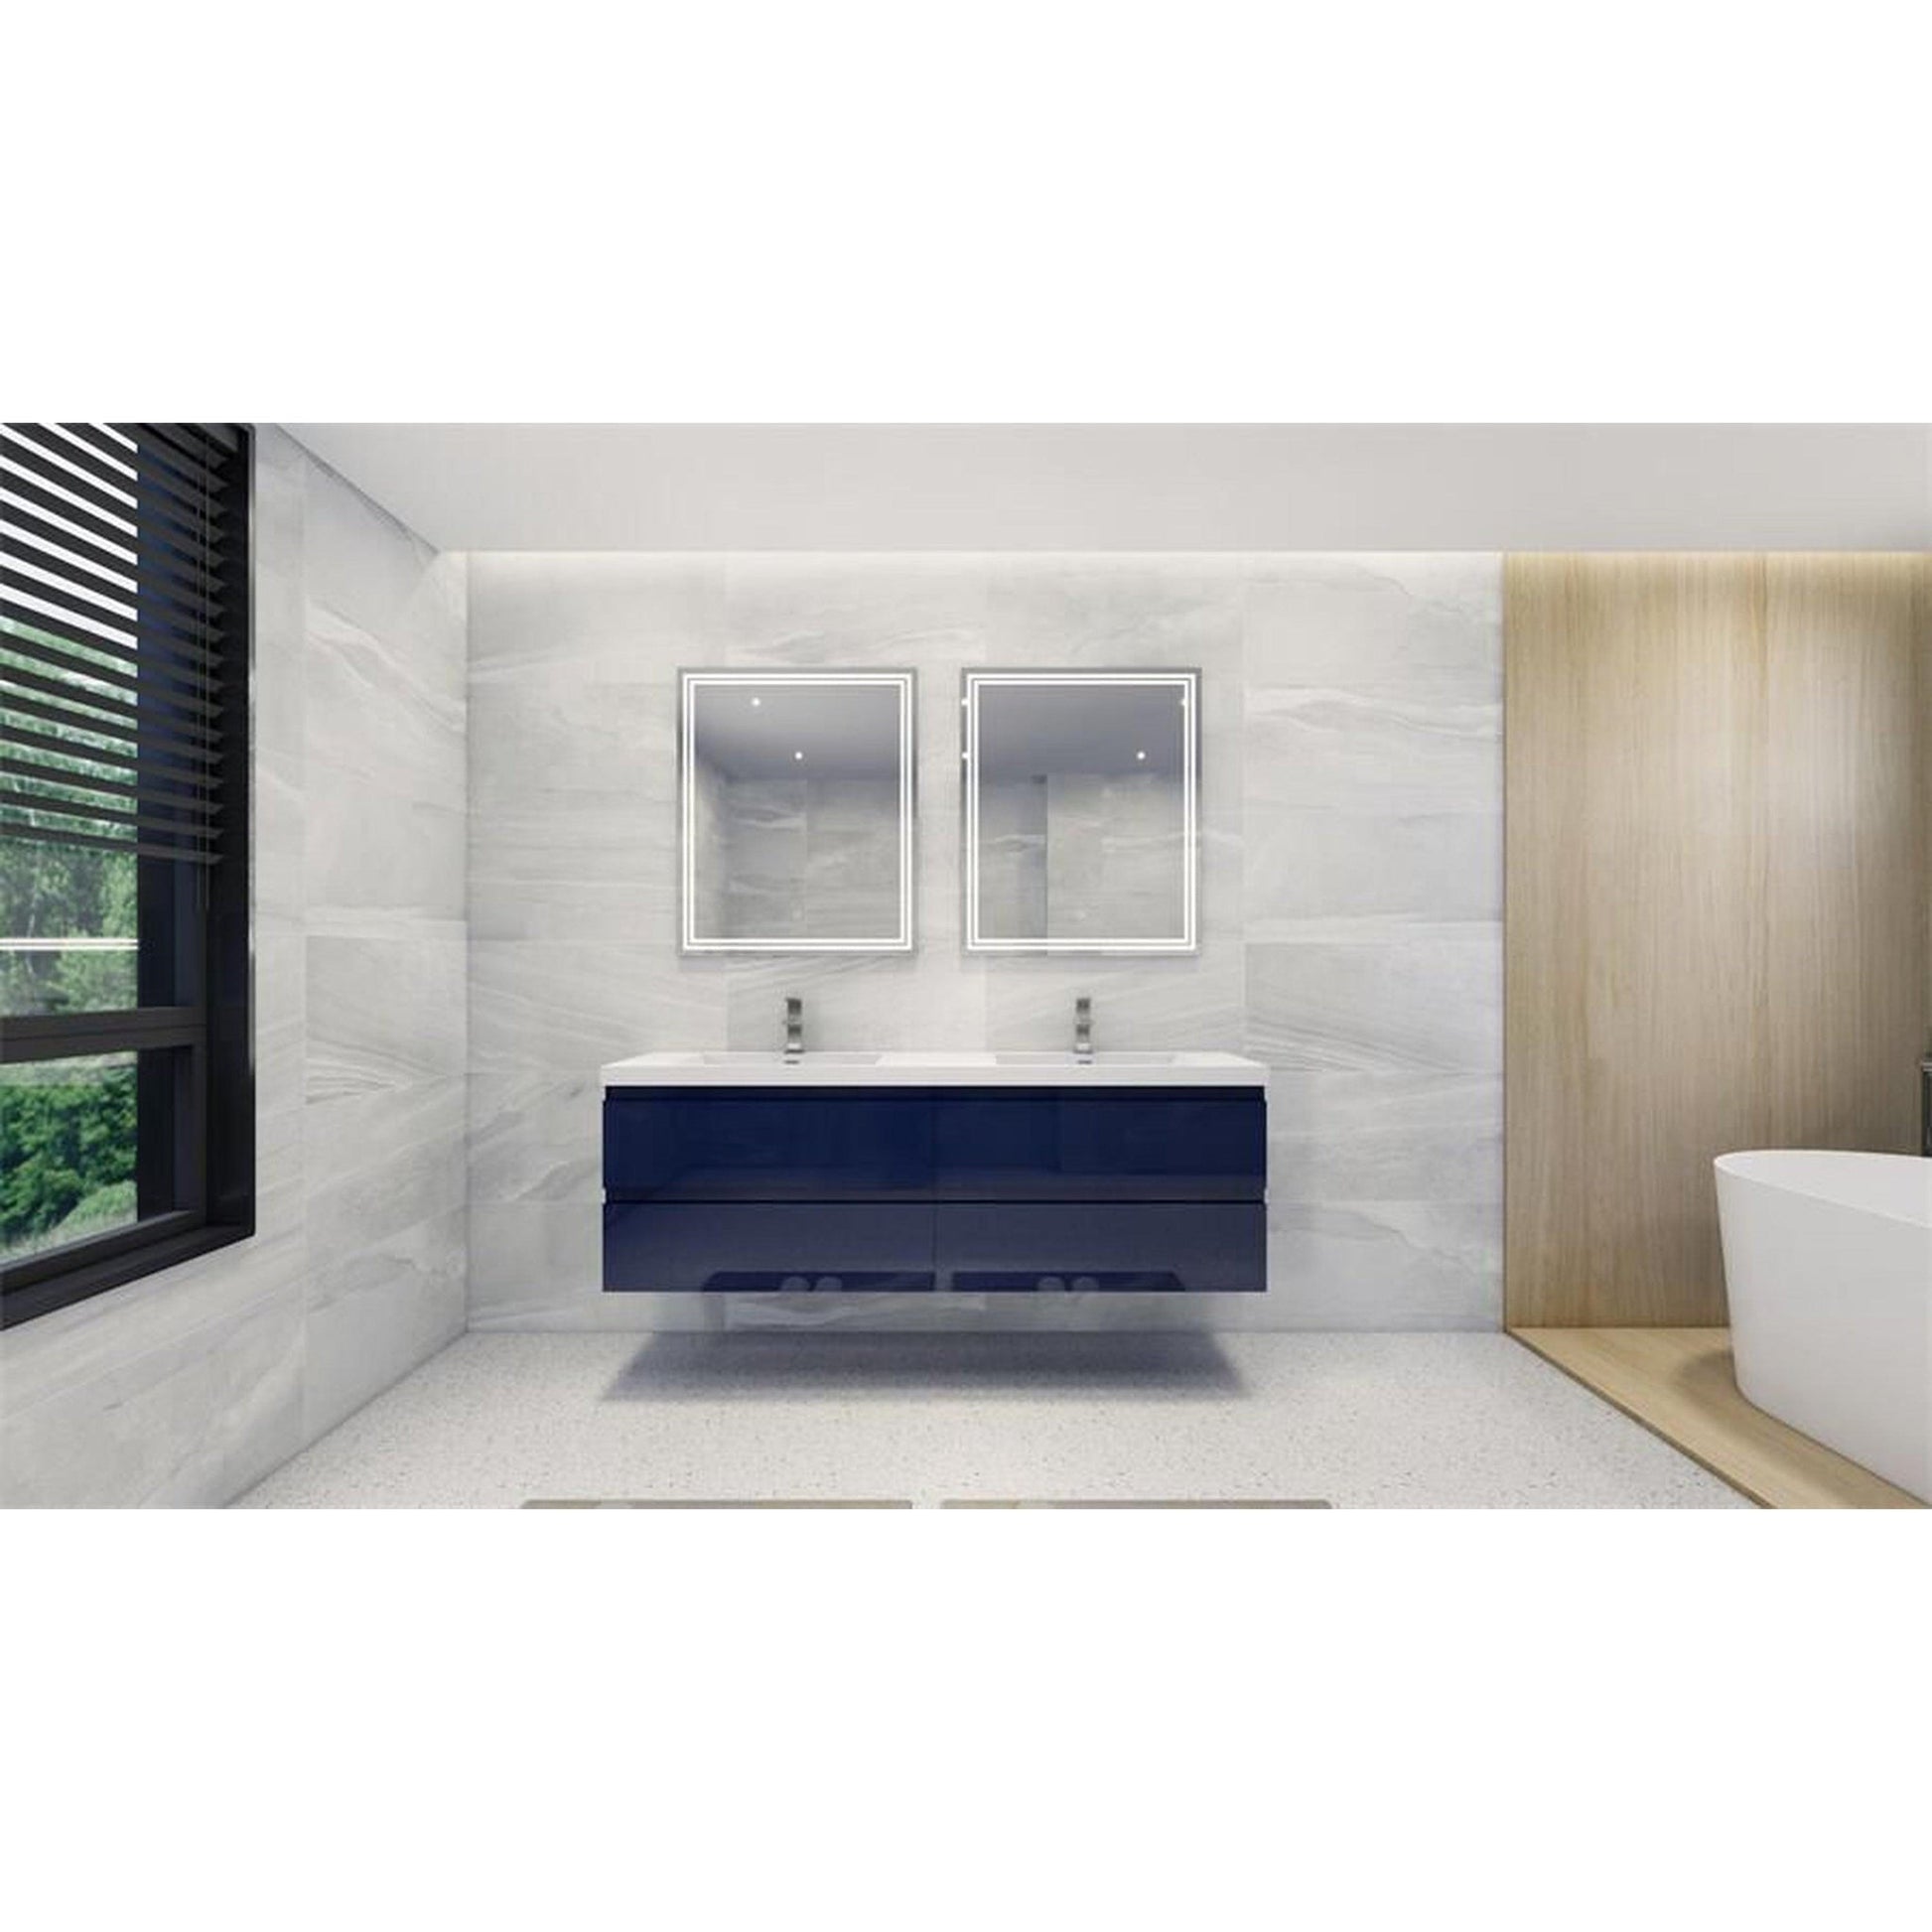 Moreno Bath Bohemia Lina 72" High Gloss Night Blue Wall-Mounted Vanity With Double Reinforced White Acrylic Sinks